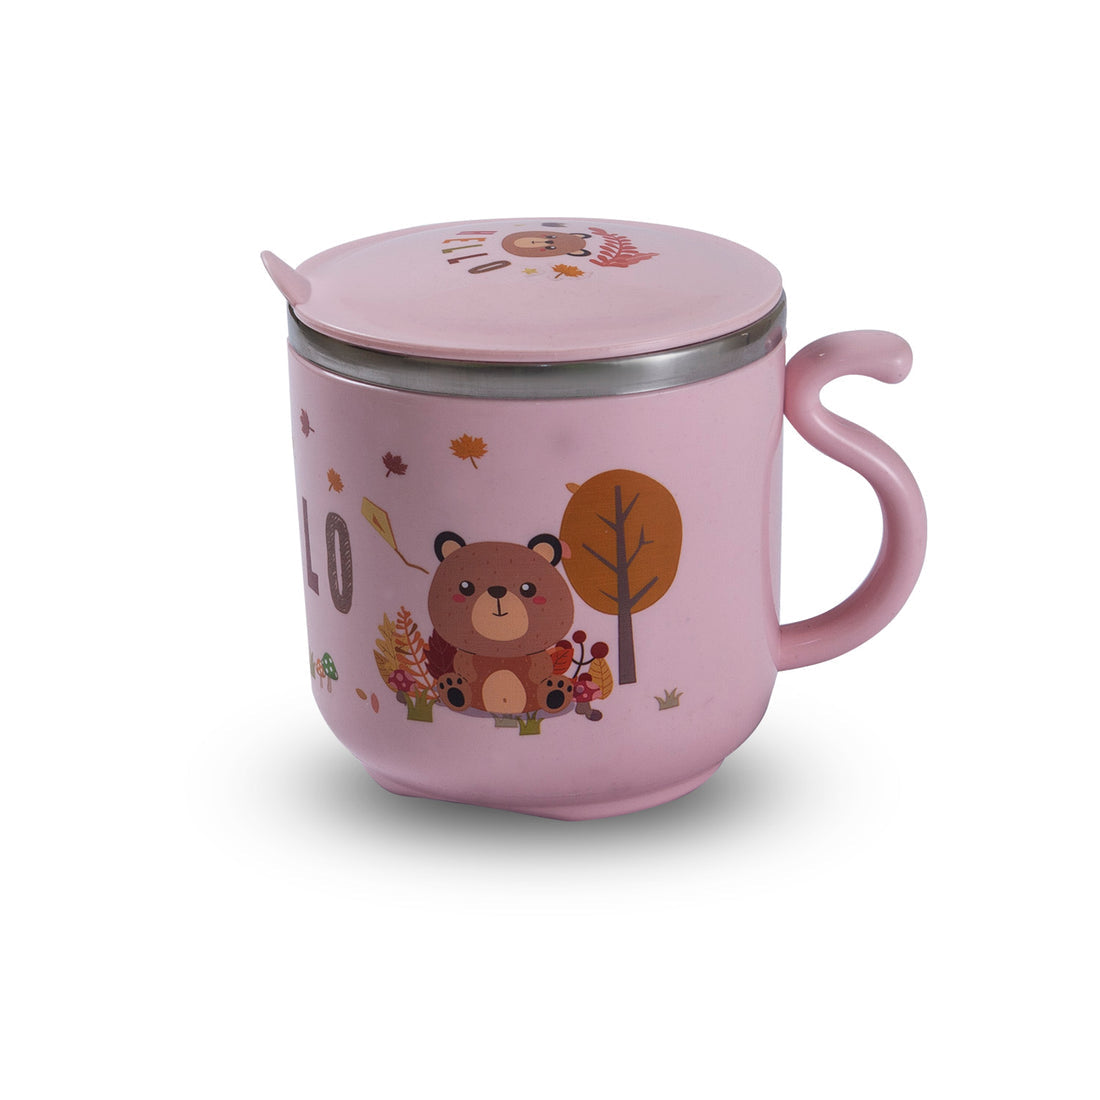 Cute Steel Cups/Mugs with Lids